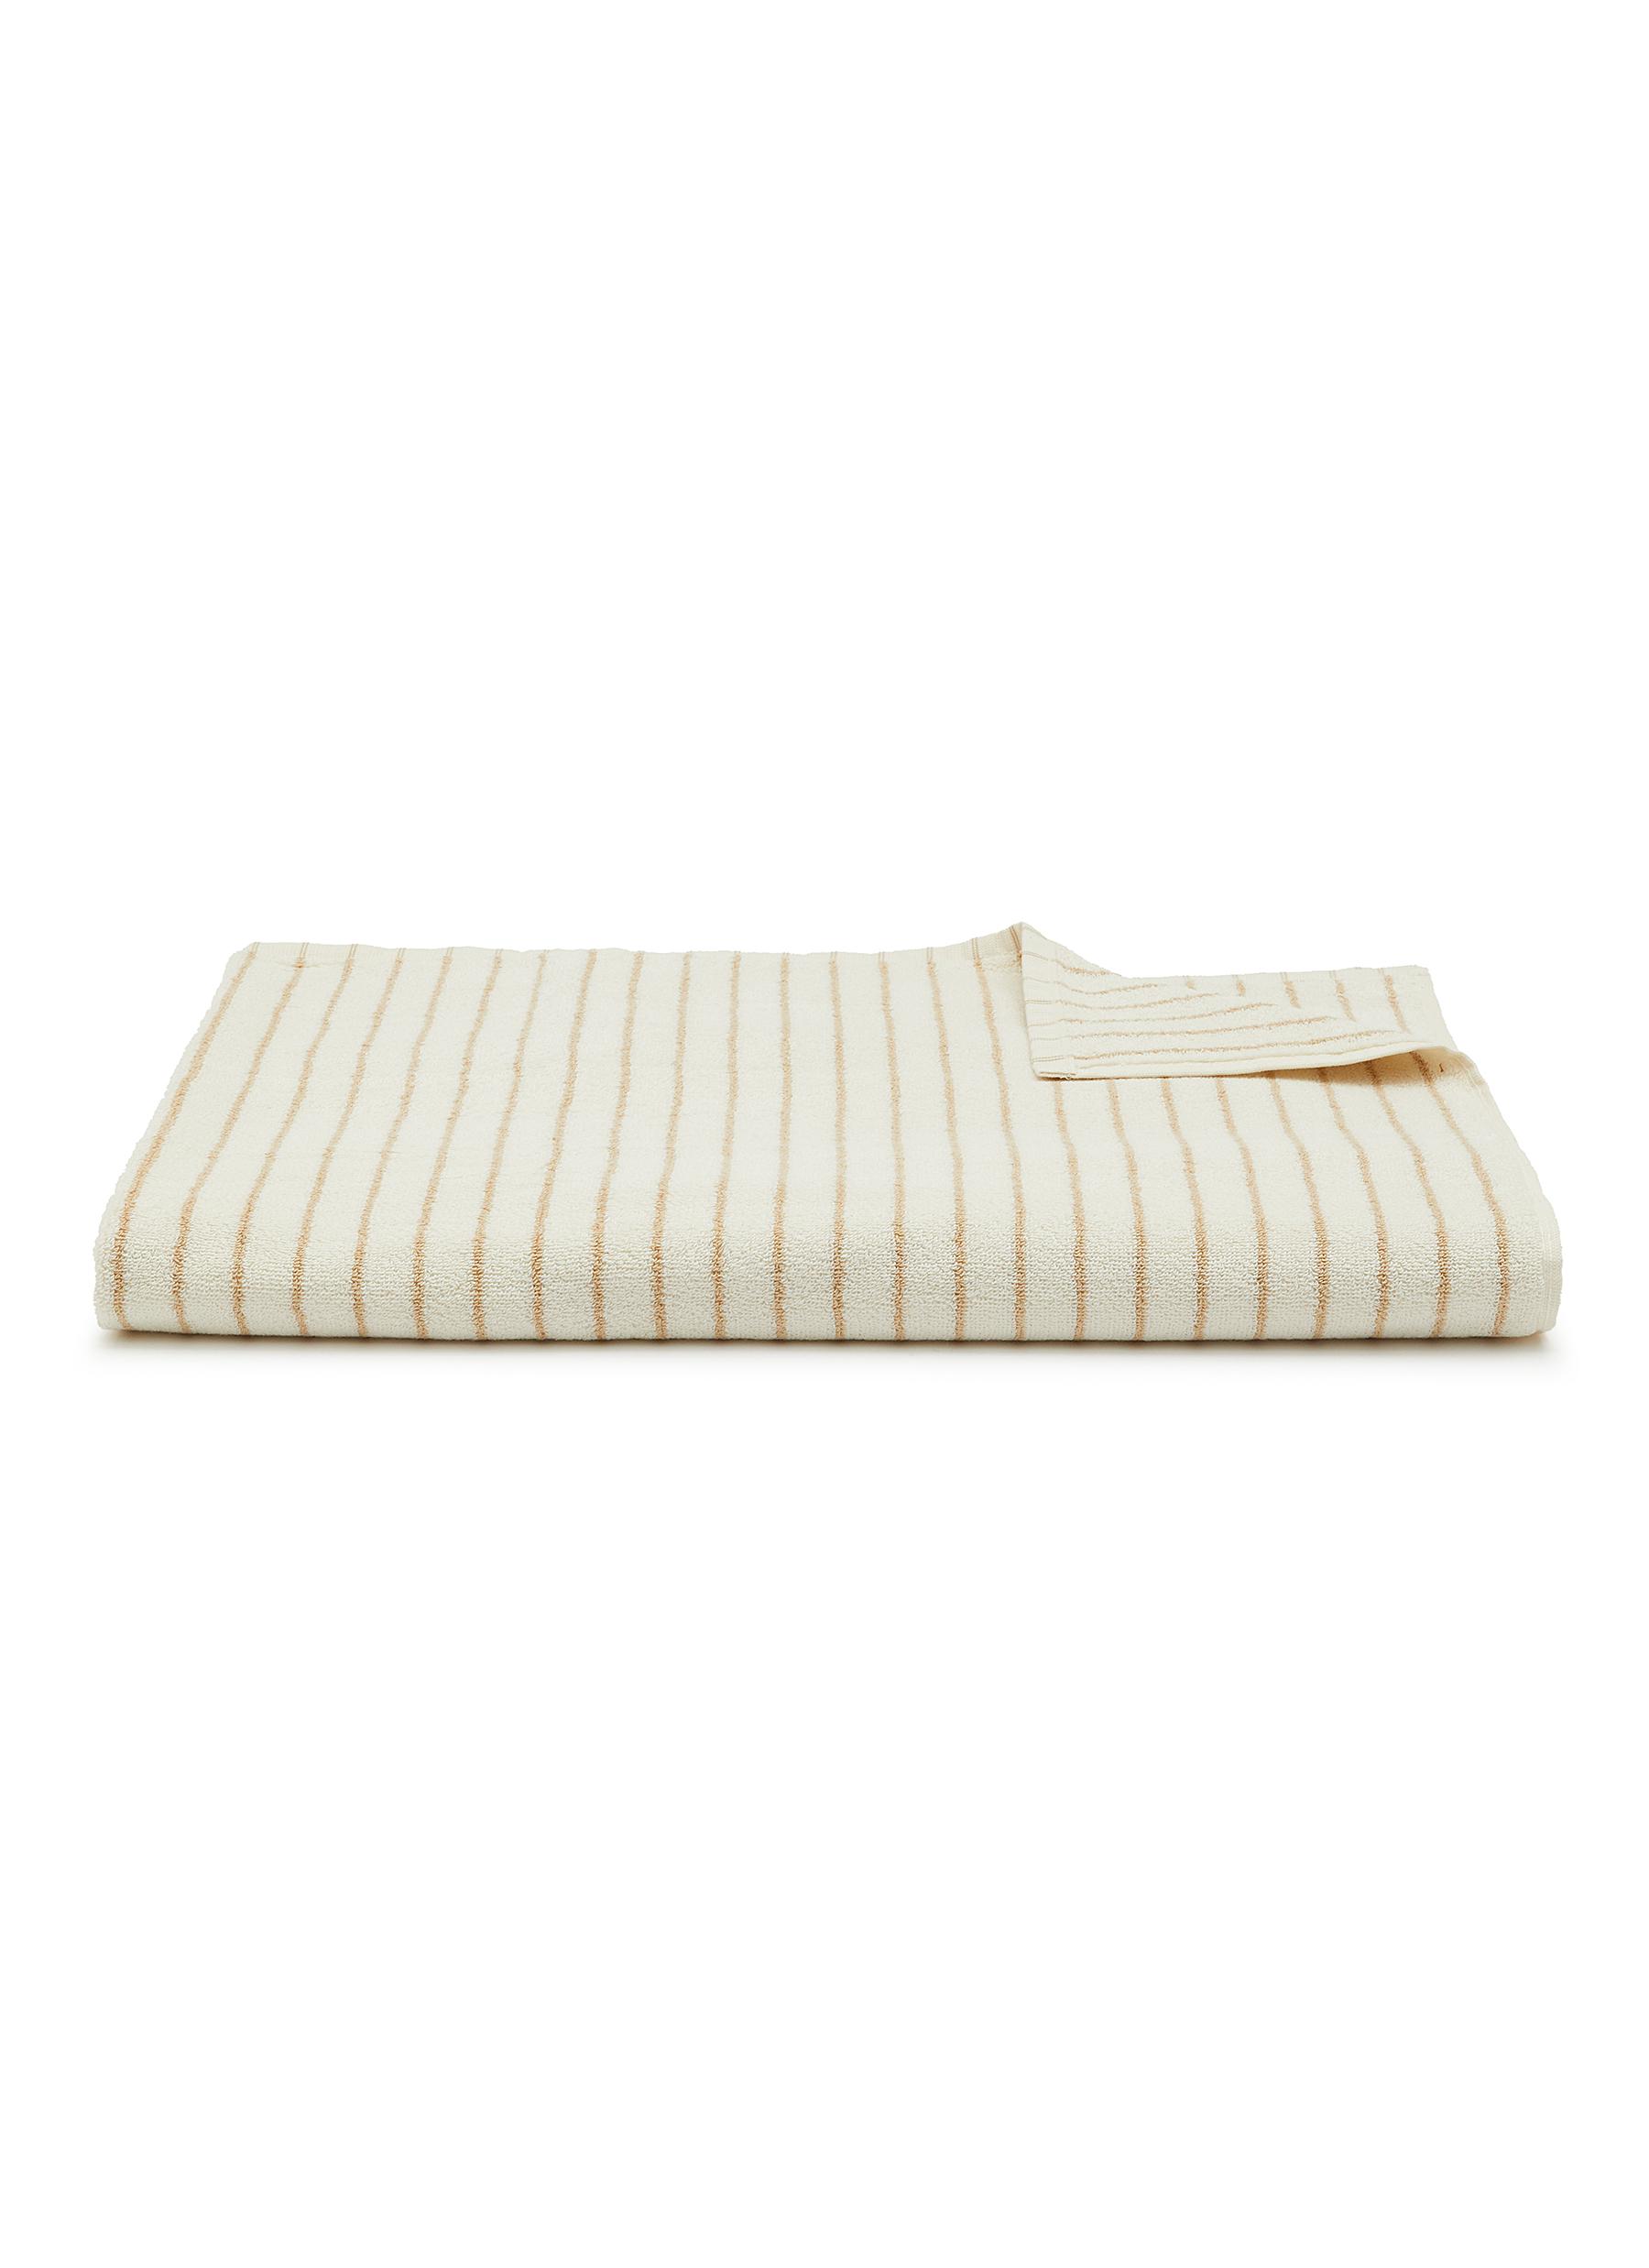 Organic Cotton Terry Bath Sheet - Sienna Stripes